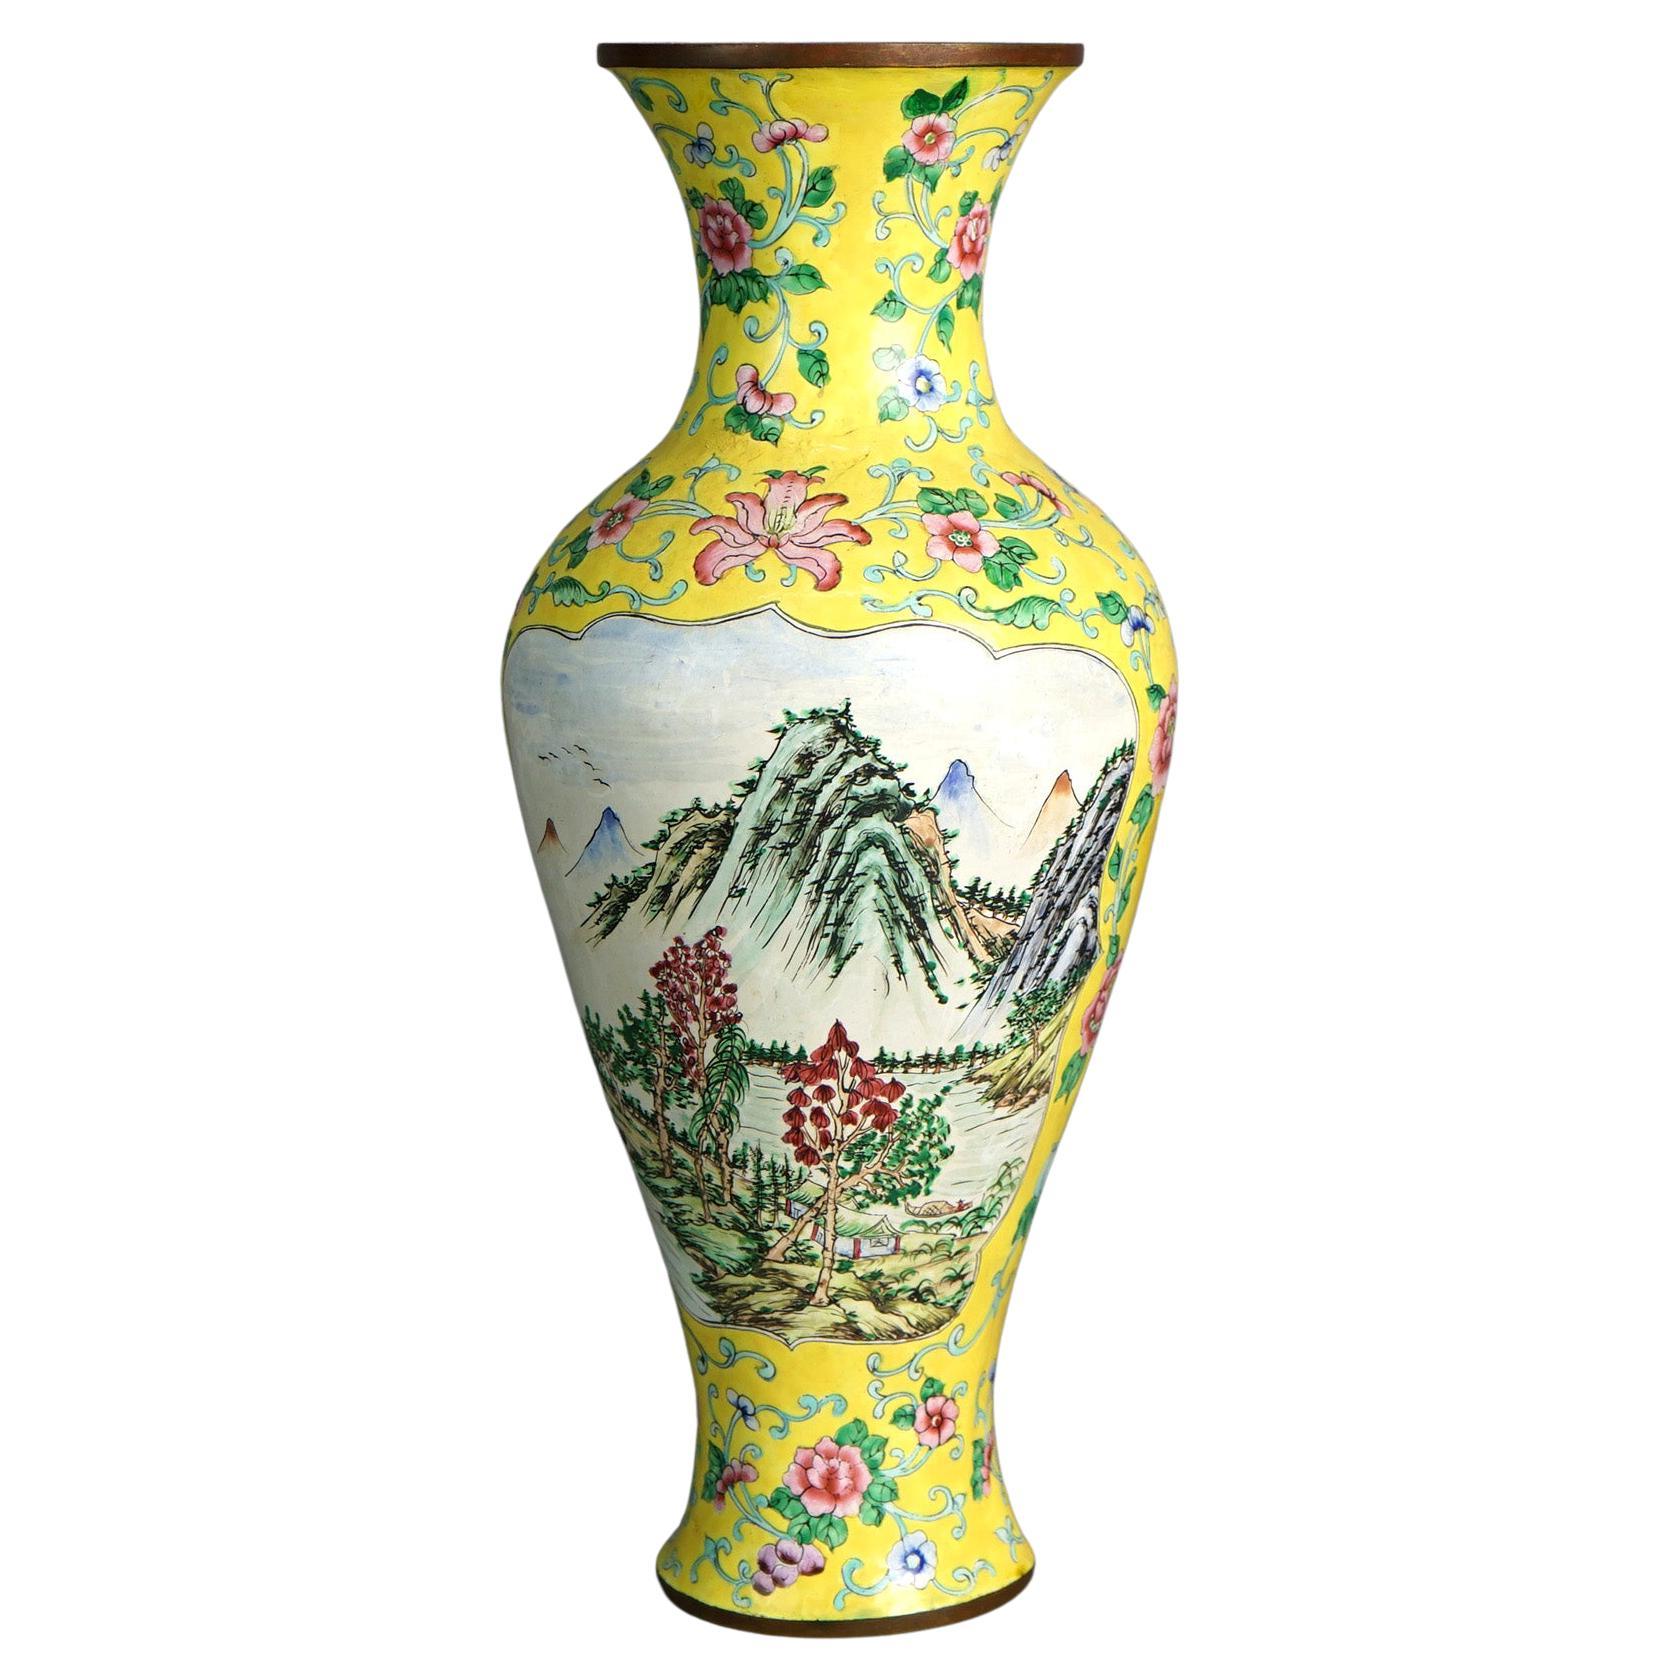 Antique Chinese Enameled Vase with Landscape & Flowers C1930